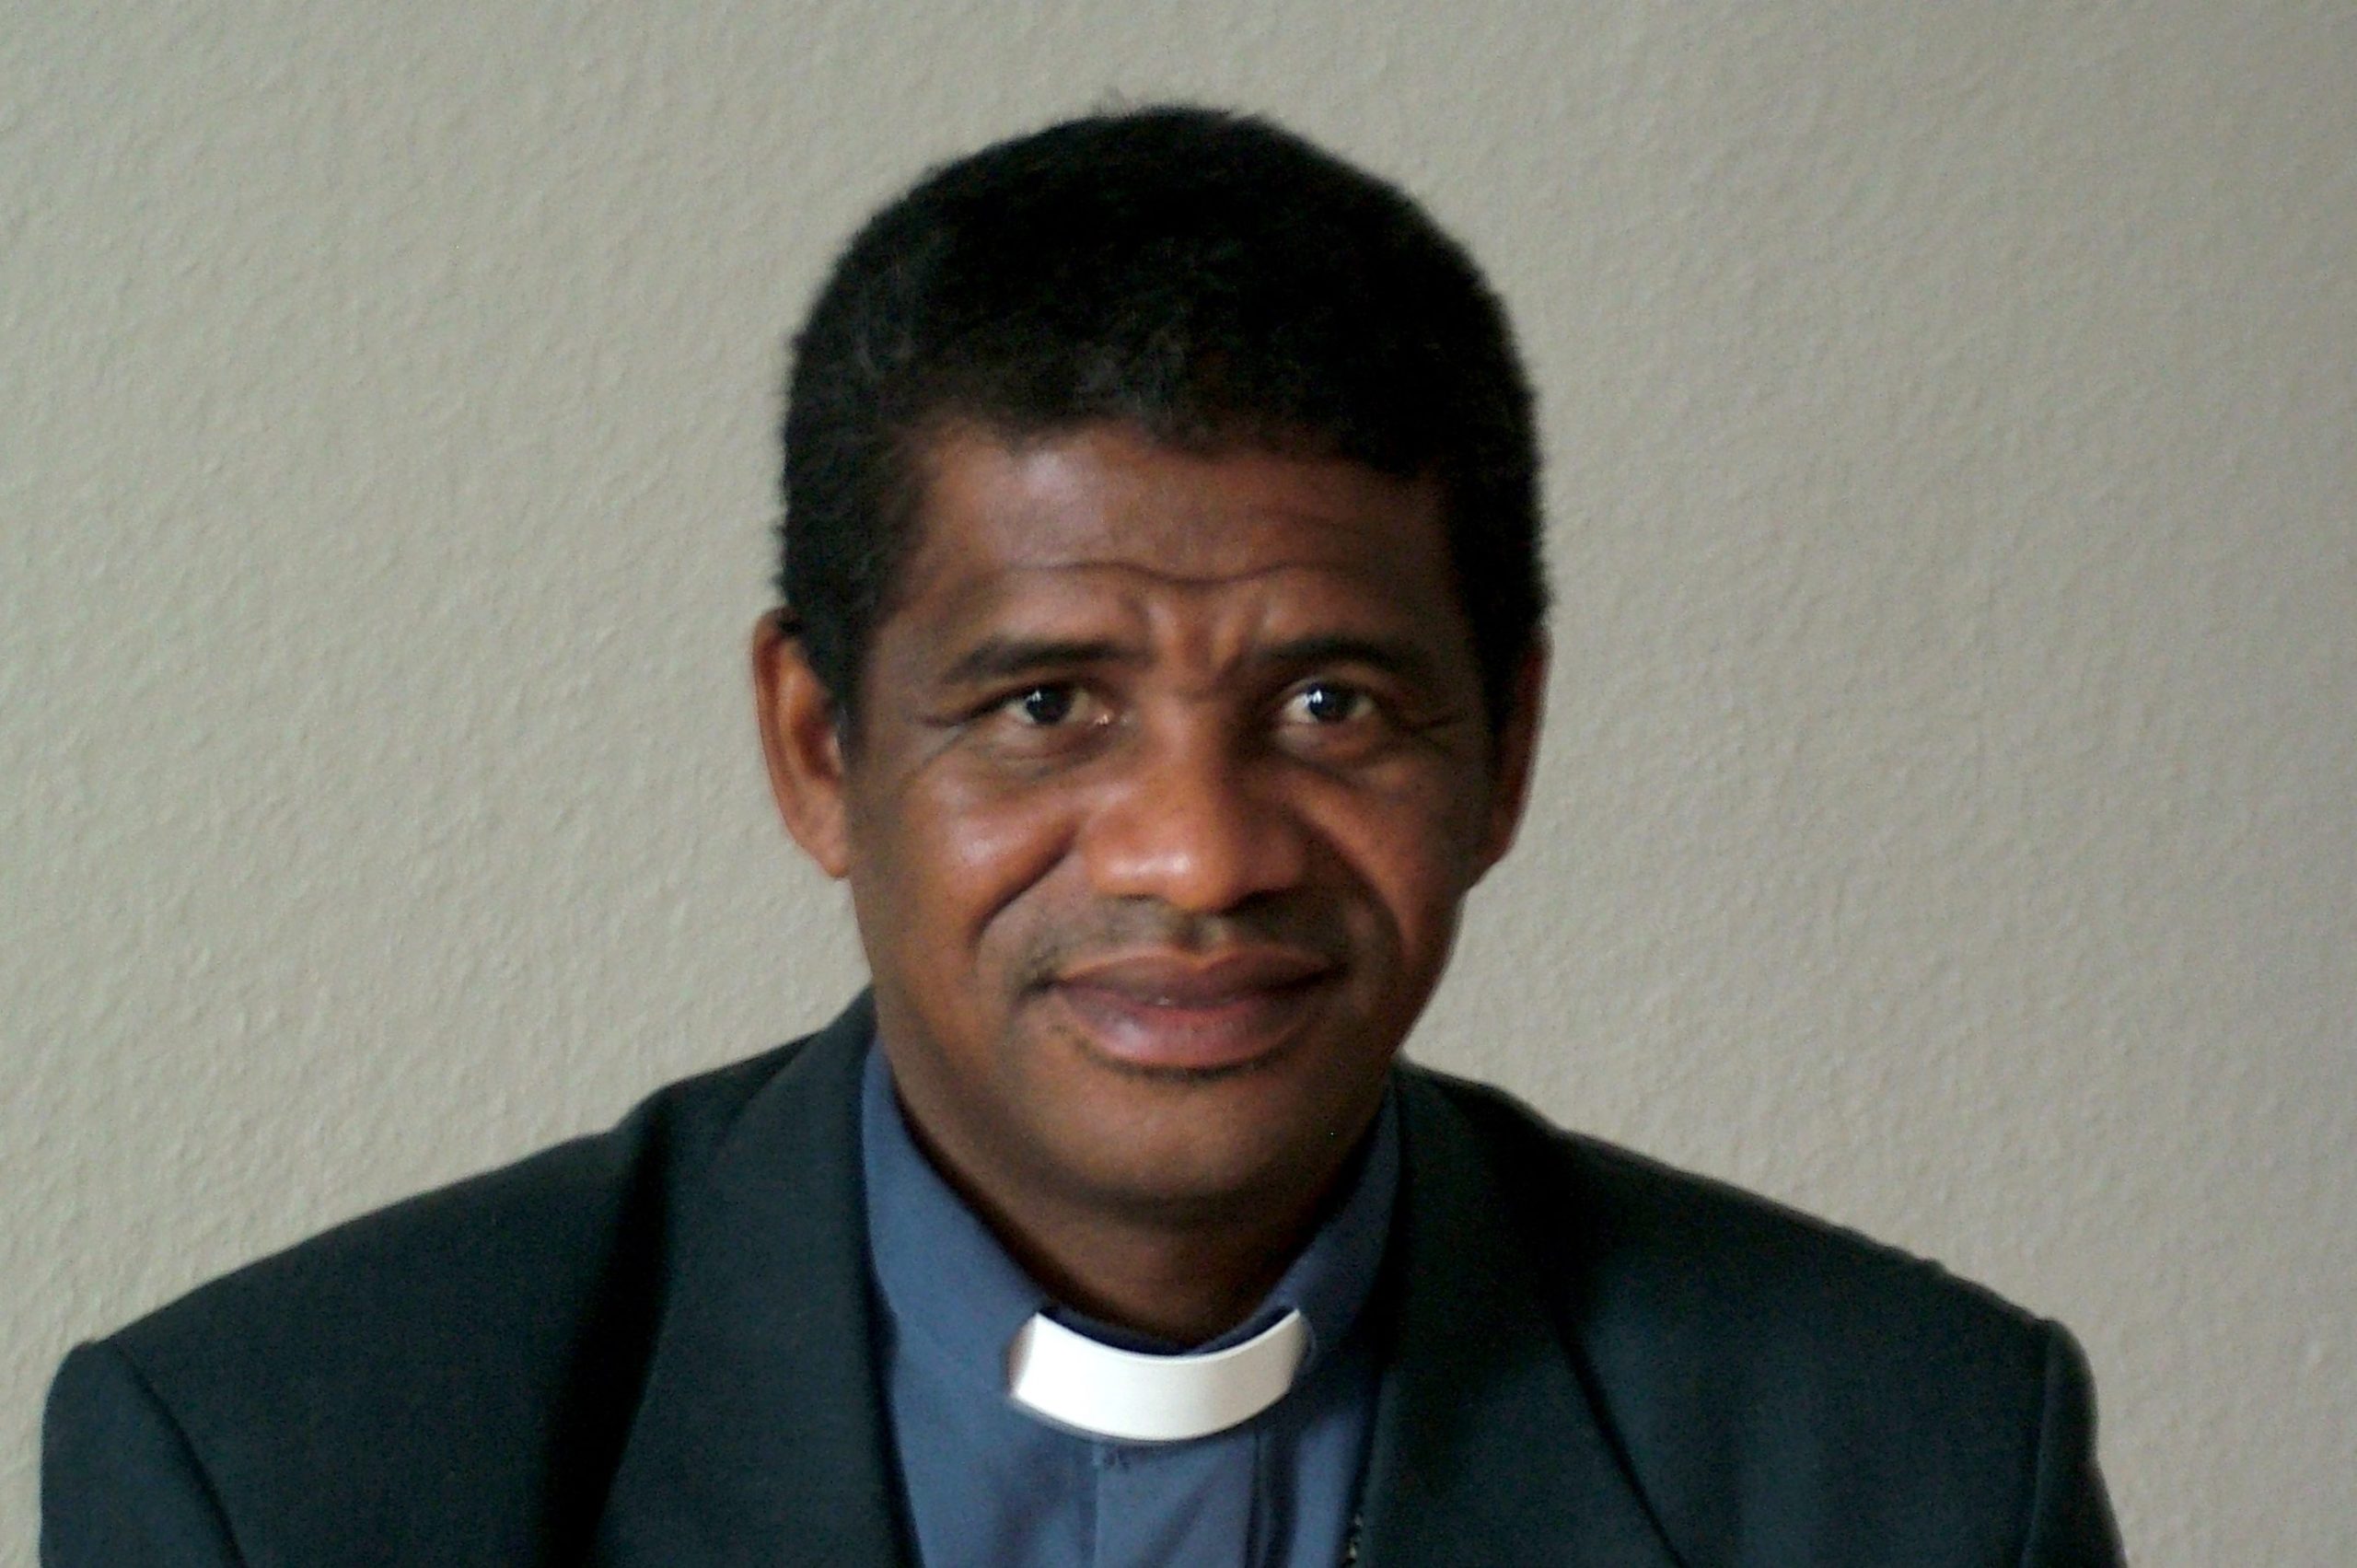 Cardinal-designate Désiré Tzarahazana of Toamasina, Madagascar (© Aid to the Church in Need)